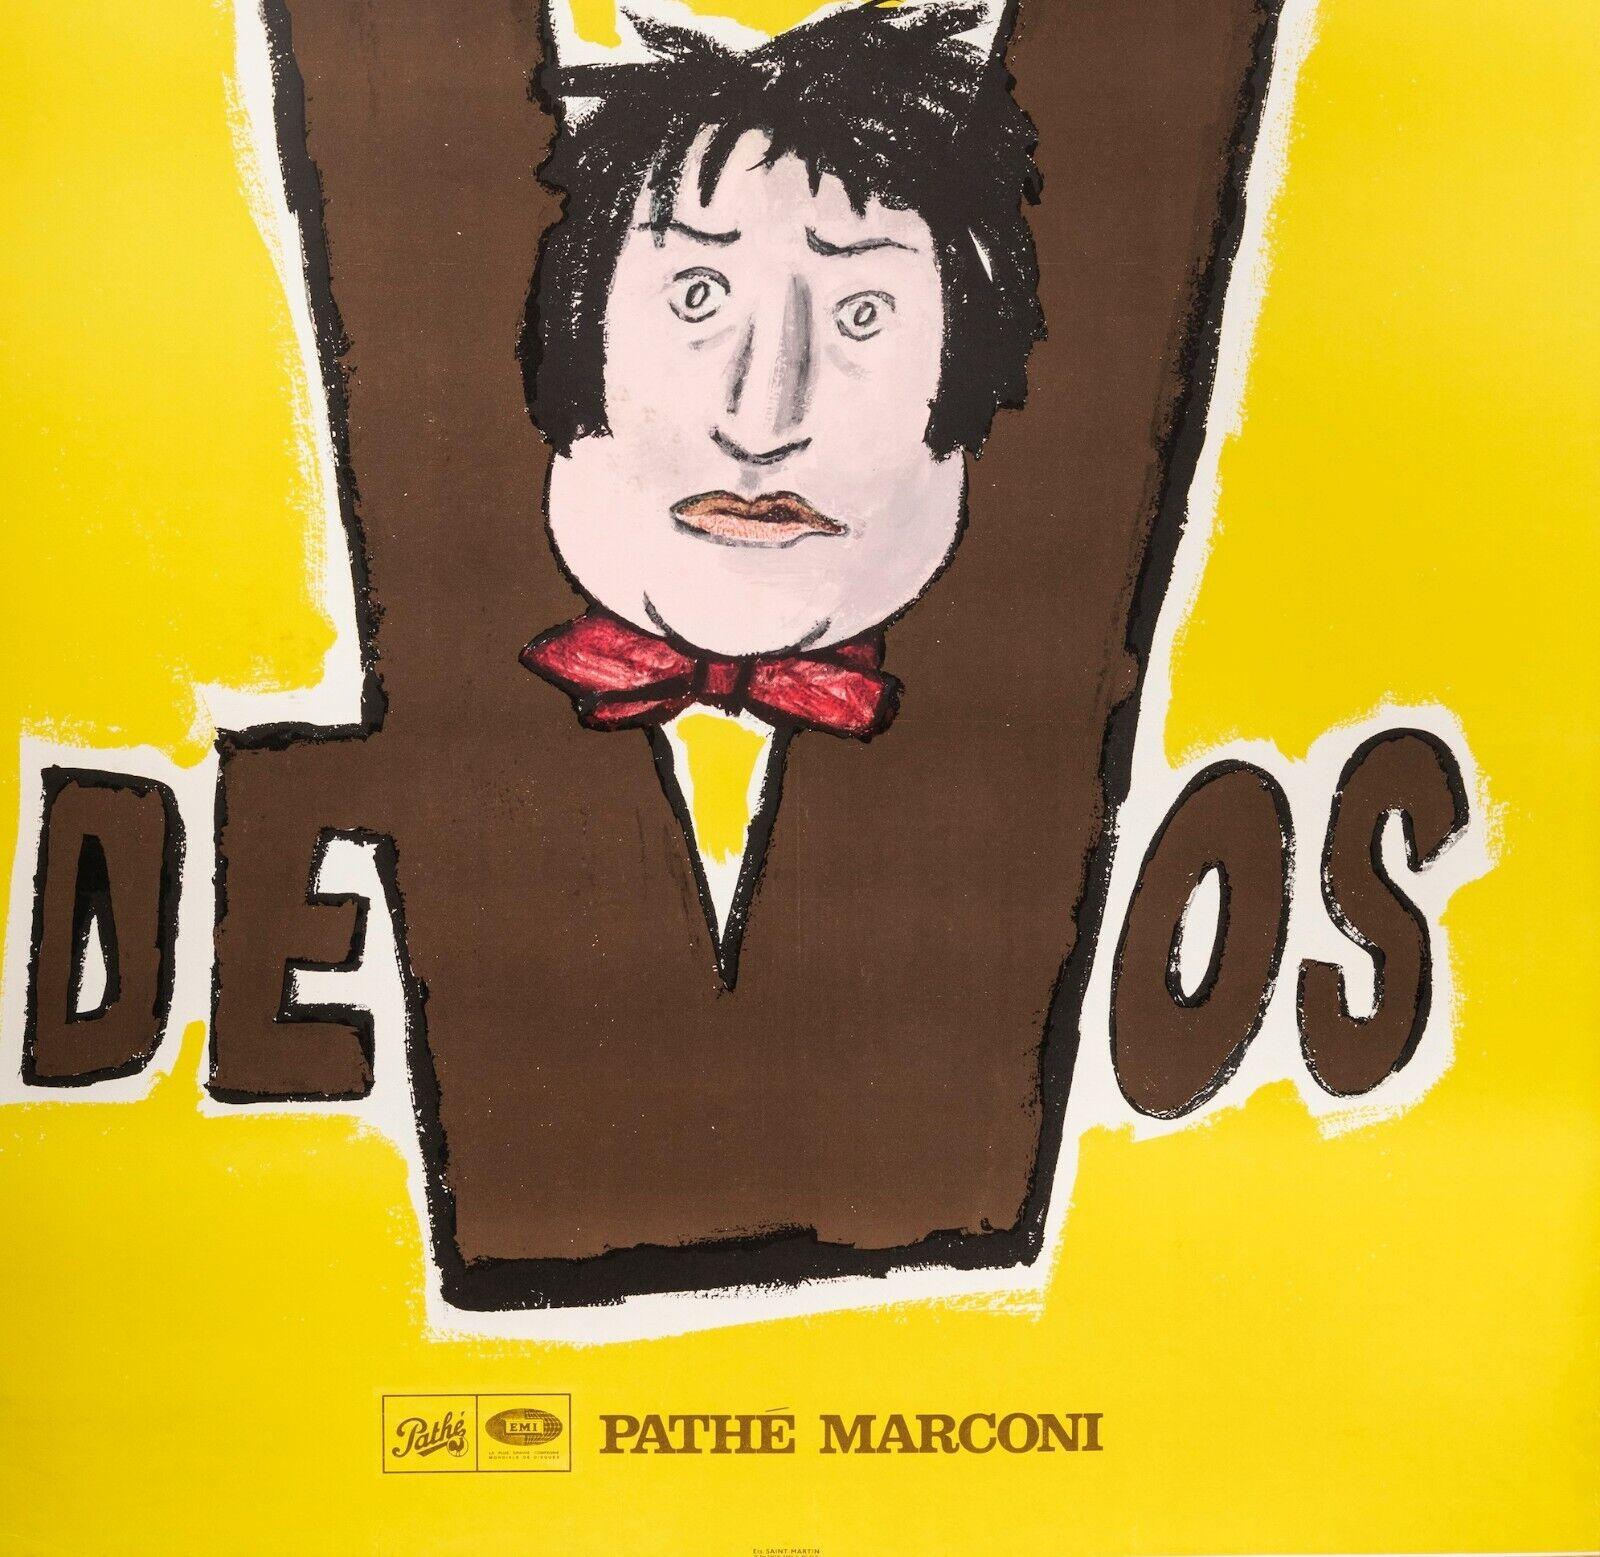 Modern Original Vintage Poster-Savignac-Devos-Pathe Marconi-Humoriste, 1968 For Sale